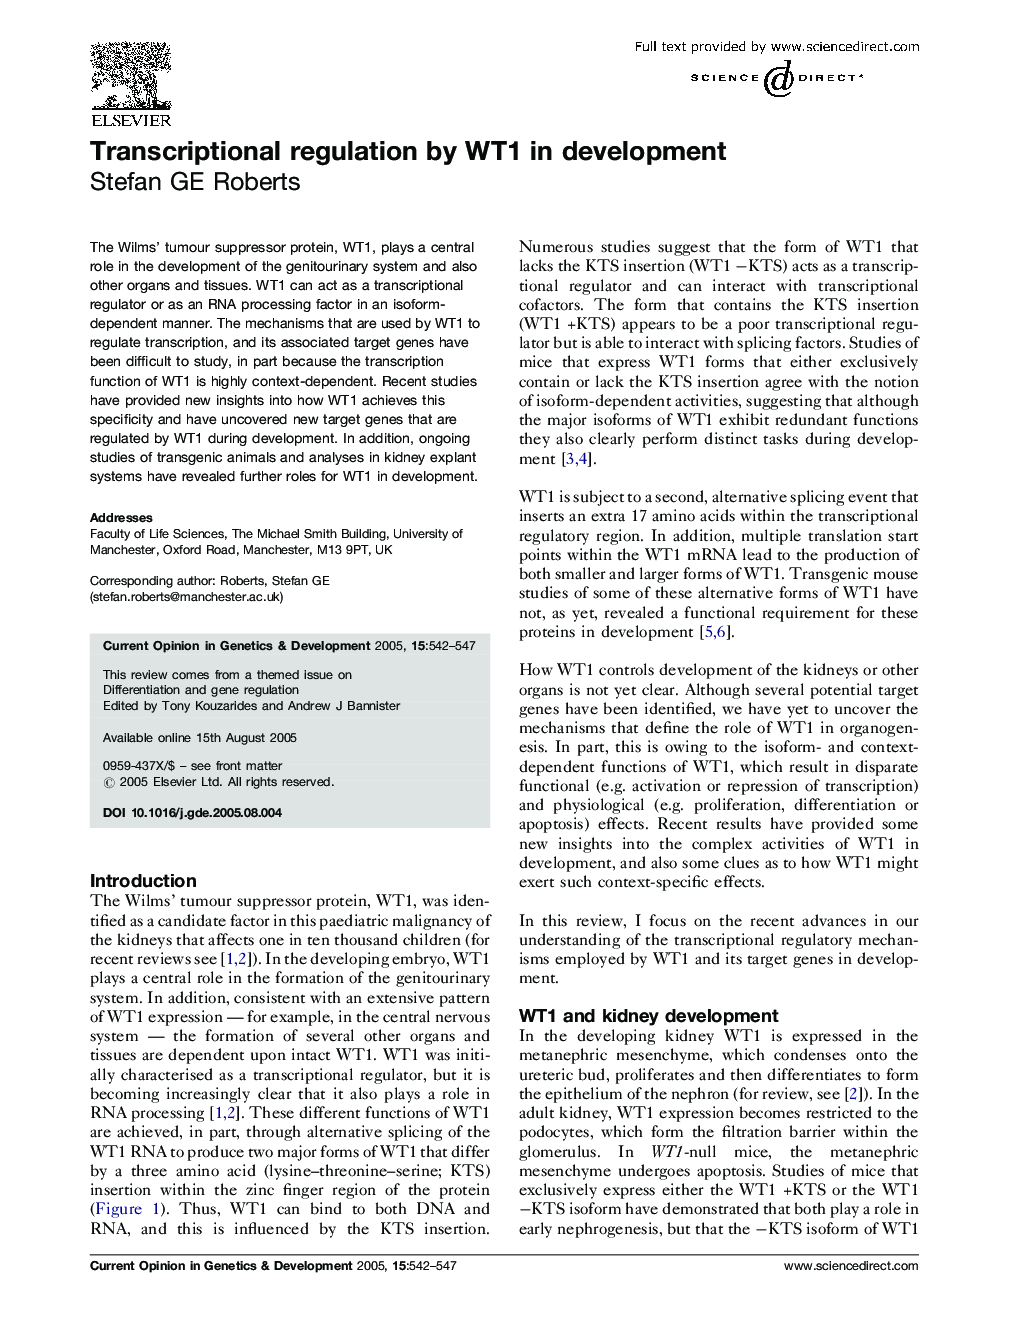 Transcriptional regulation by WT1 in development